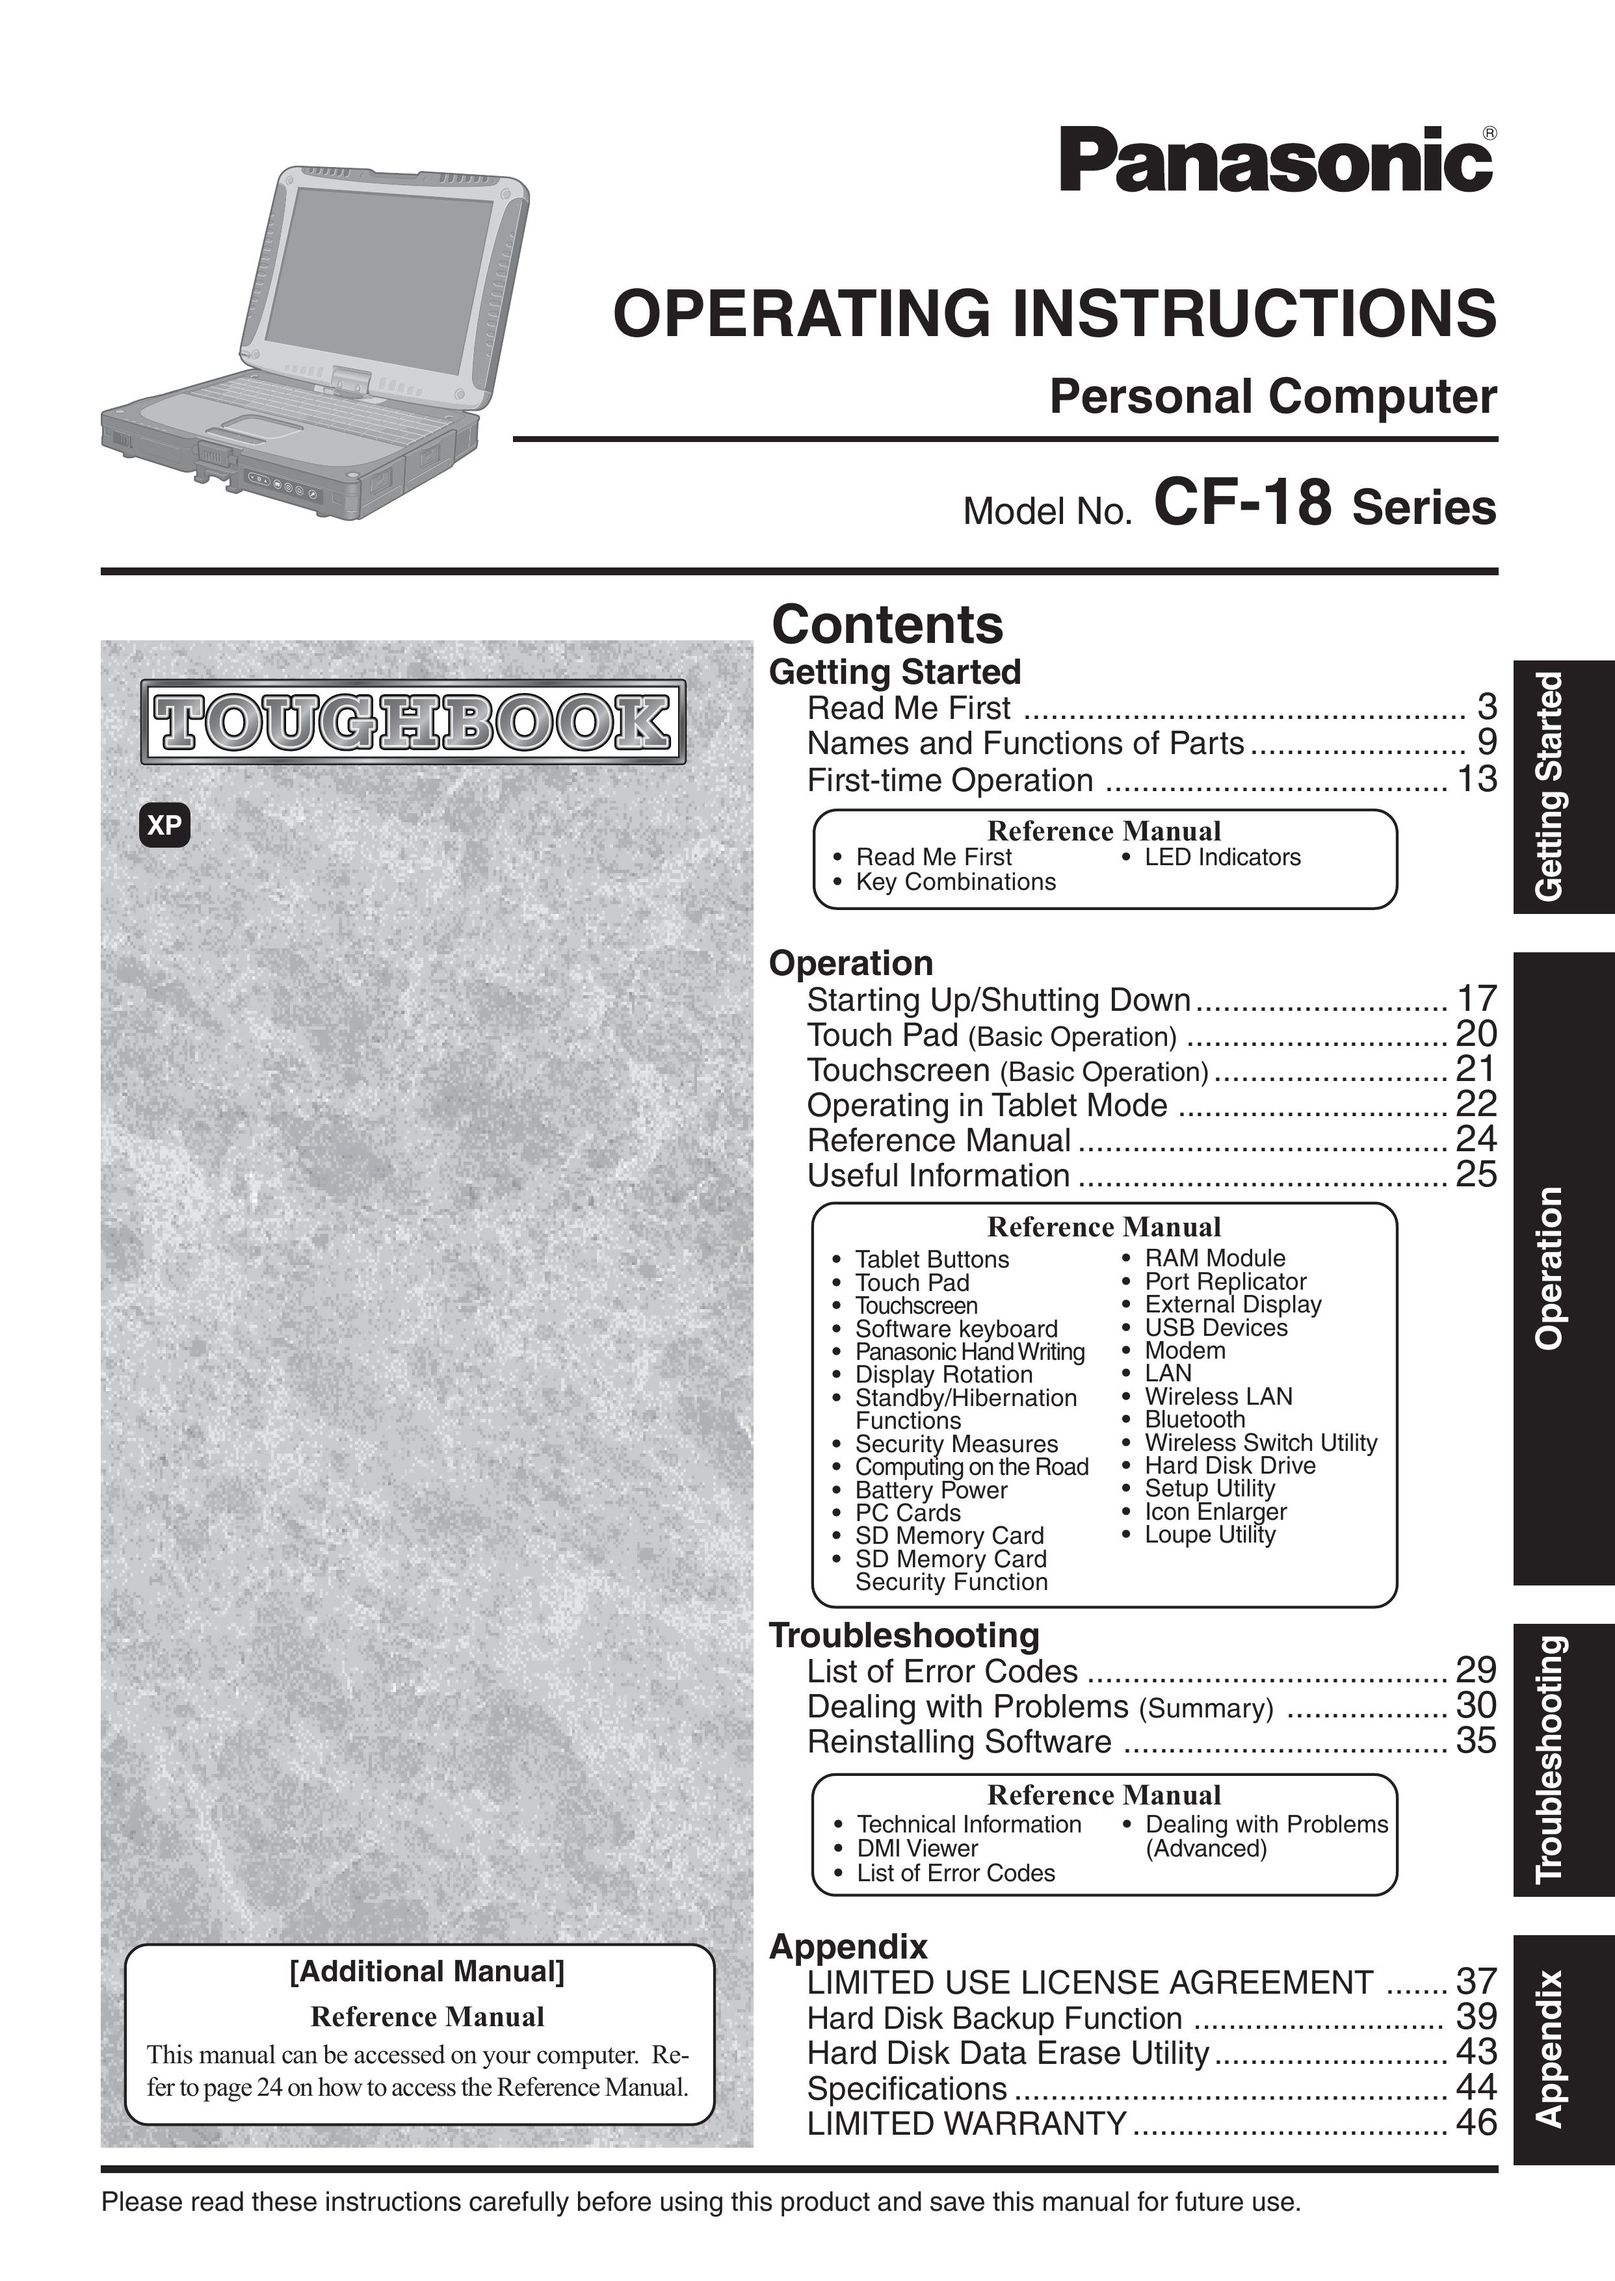 Panasonic CF-18 Series Laptop User Manual